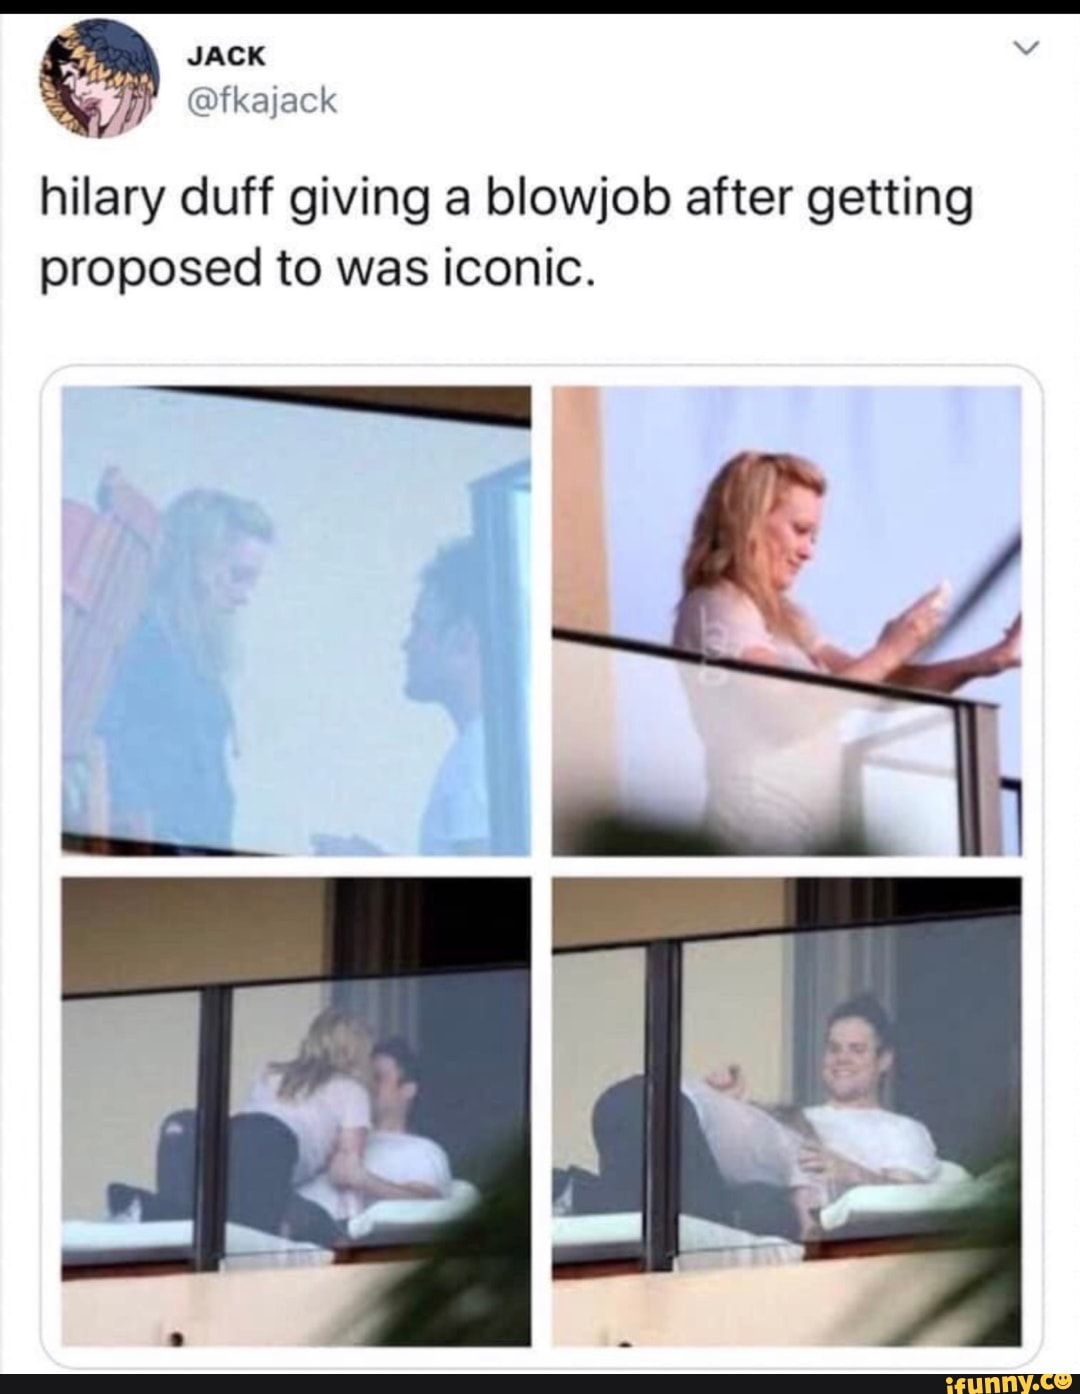 Hilary duff blowjob video